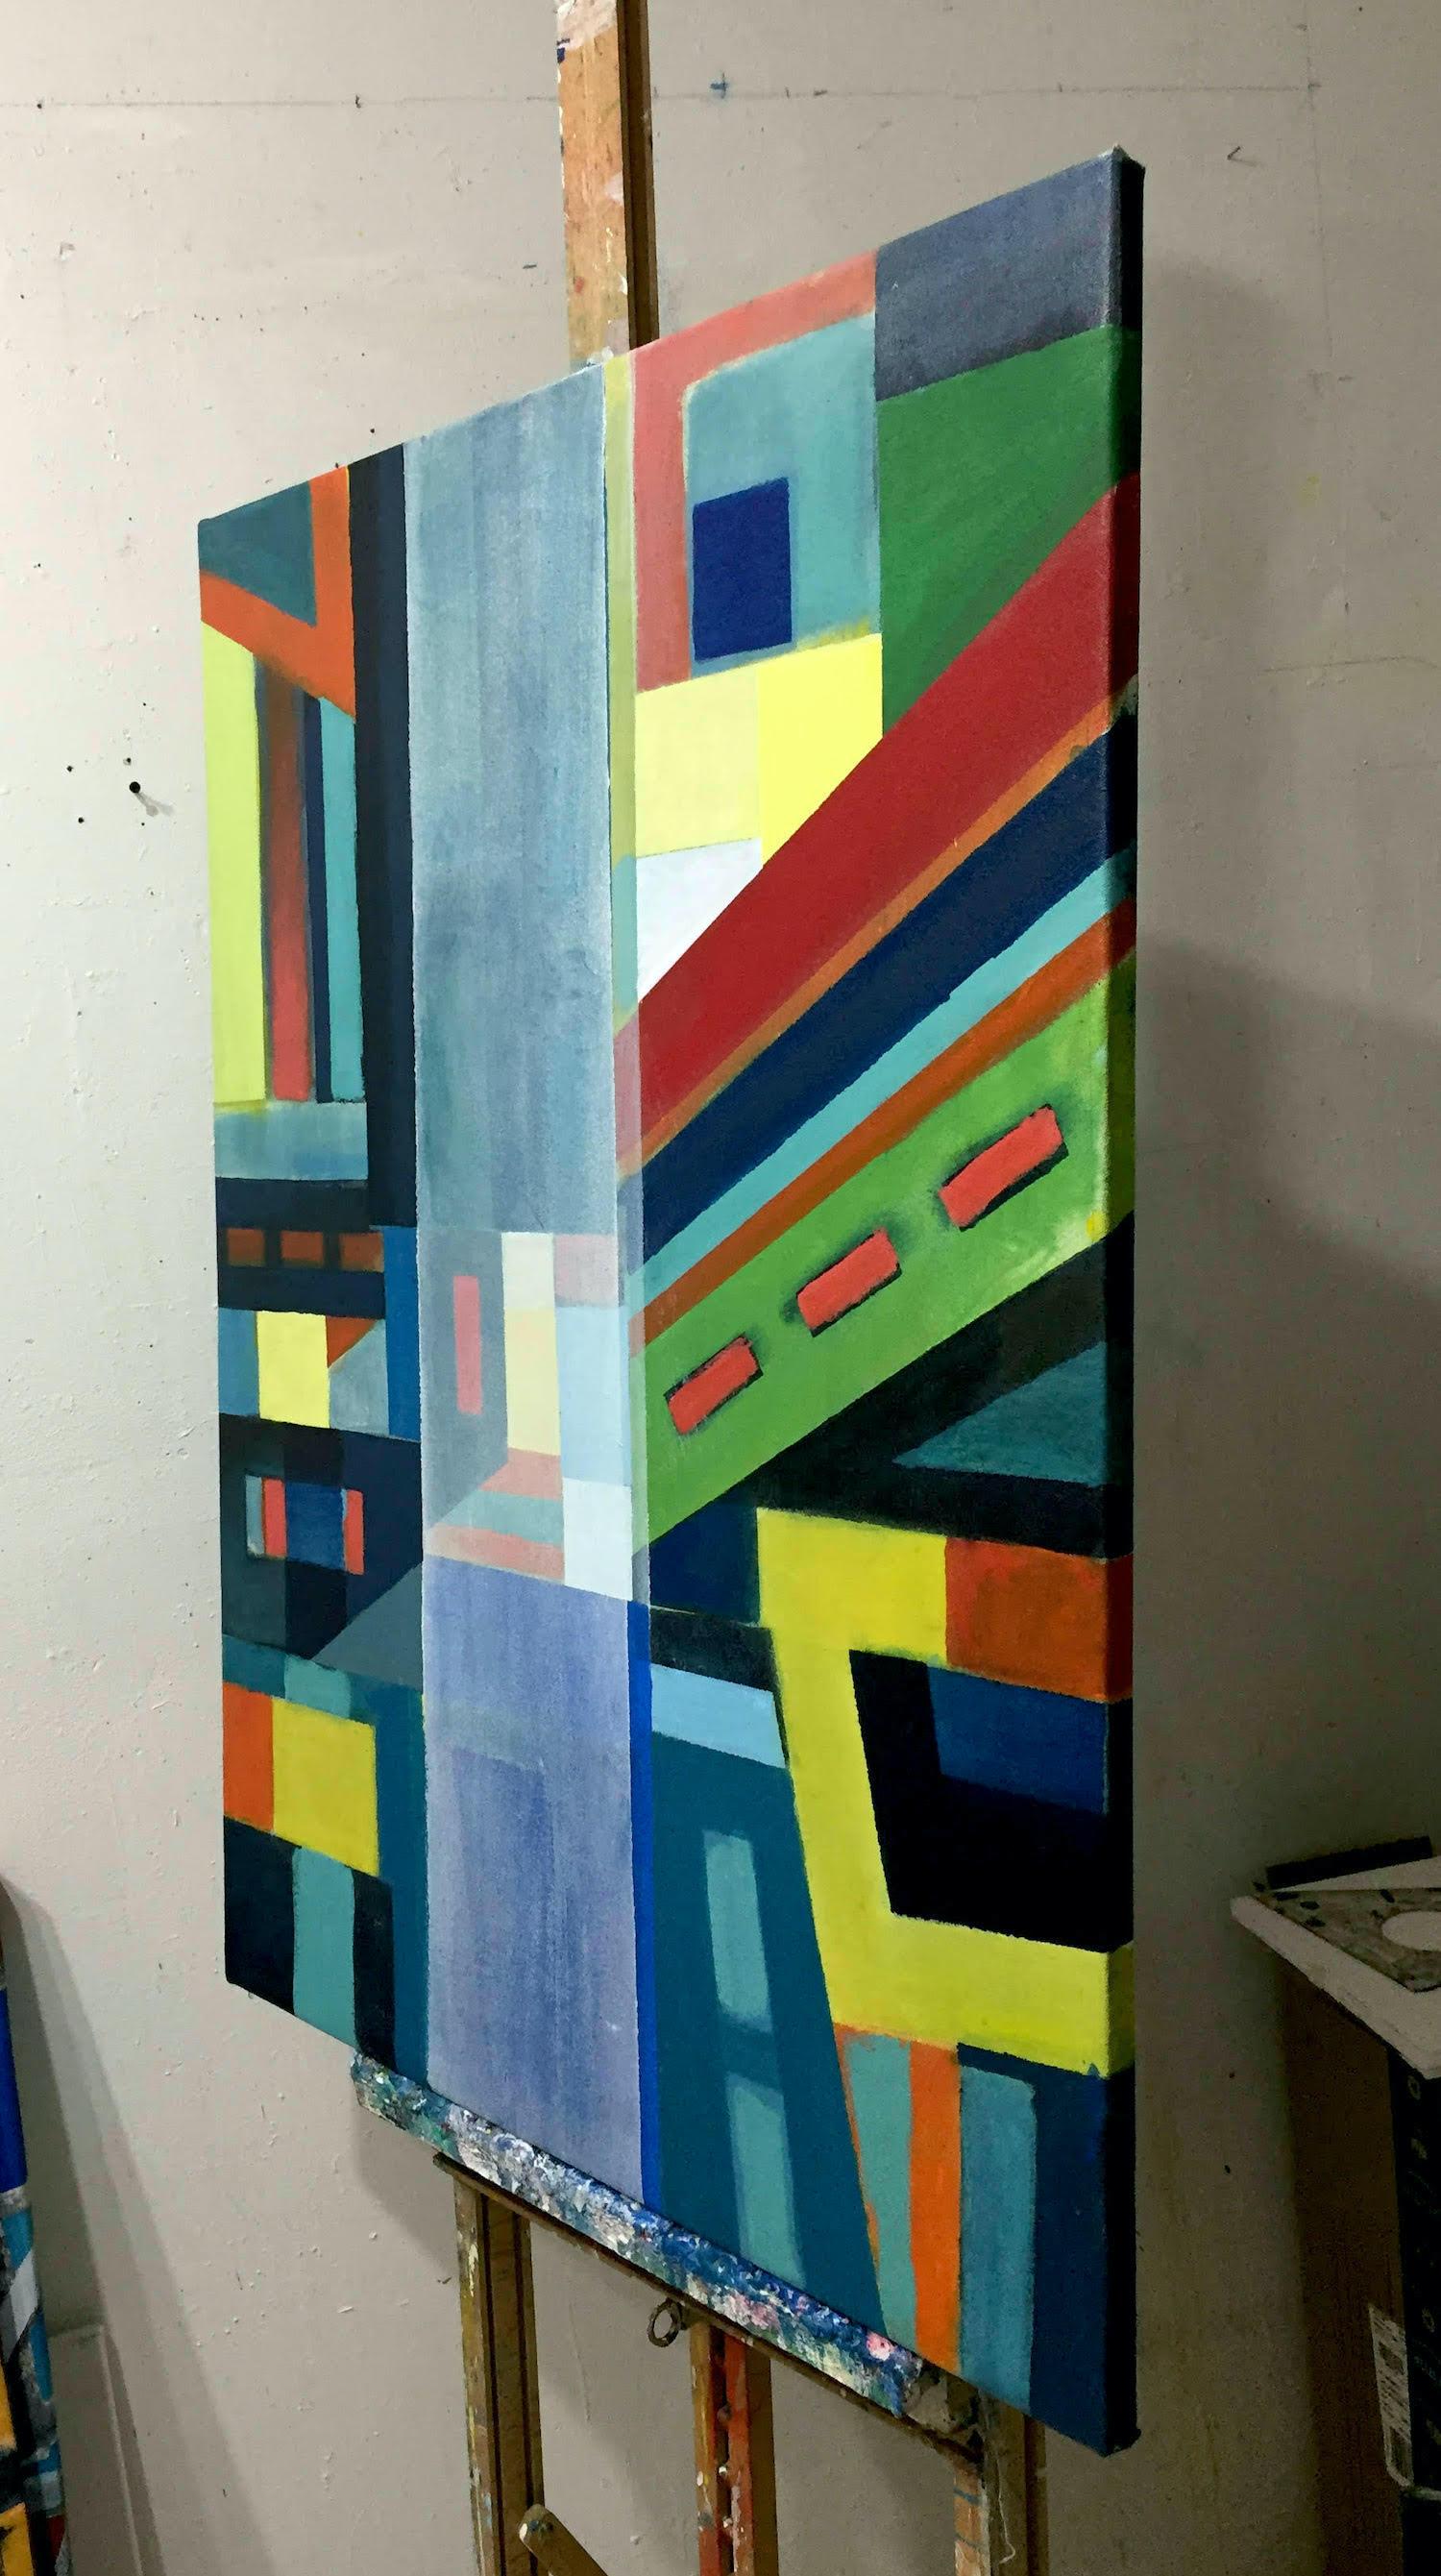 City Block Series #1, East Village New York (Geometric Abstract) - Painting by Robert Petrick